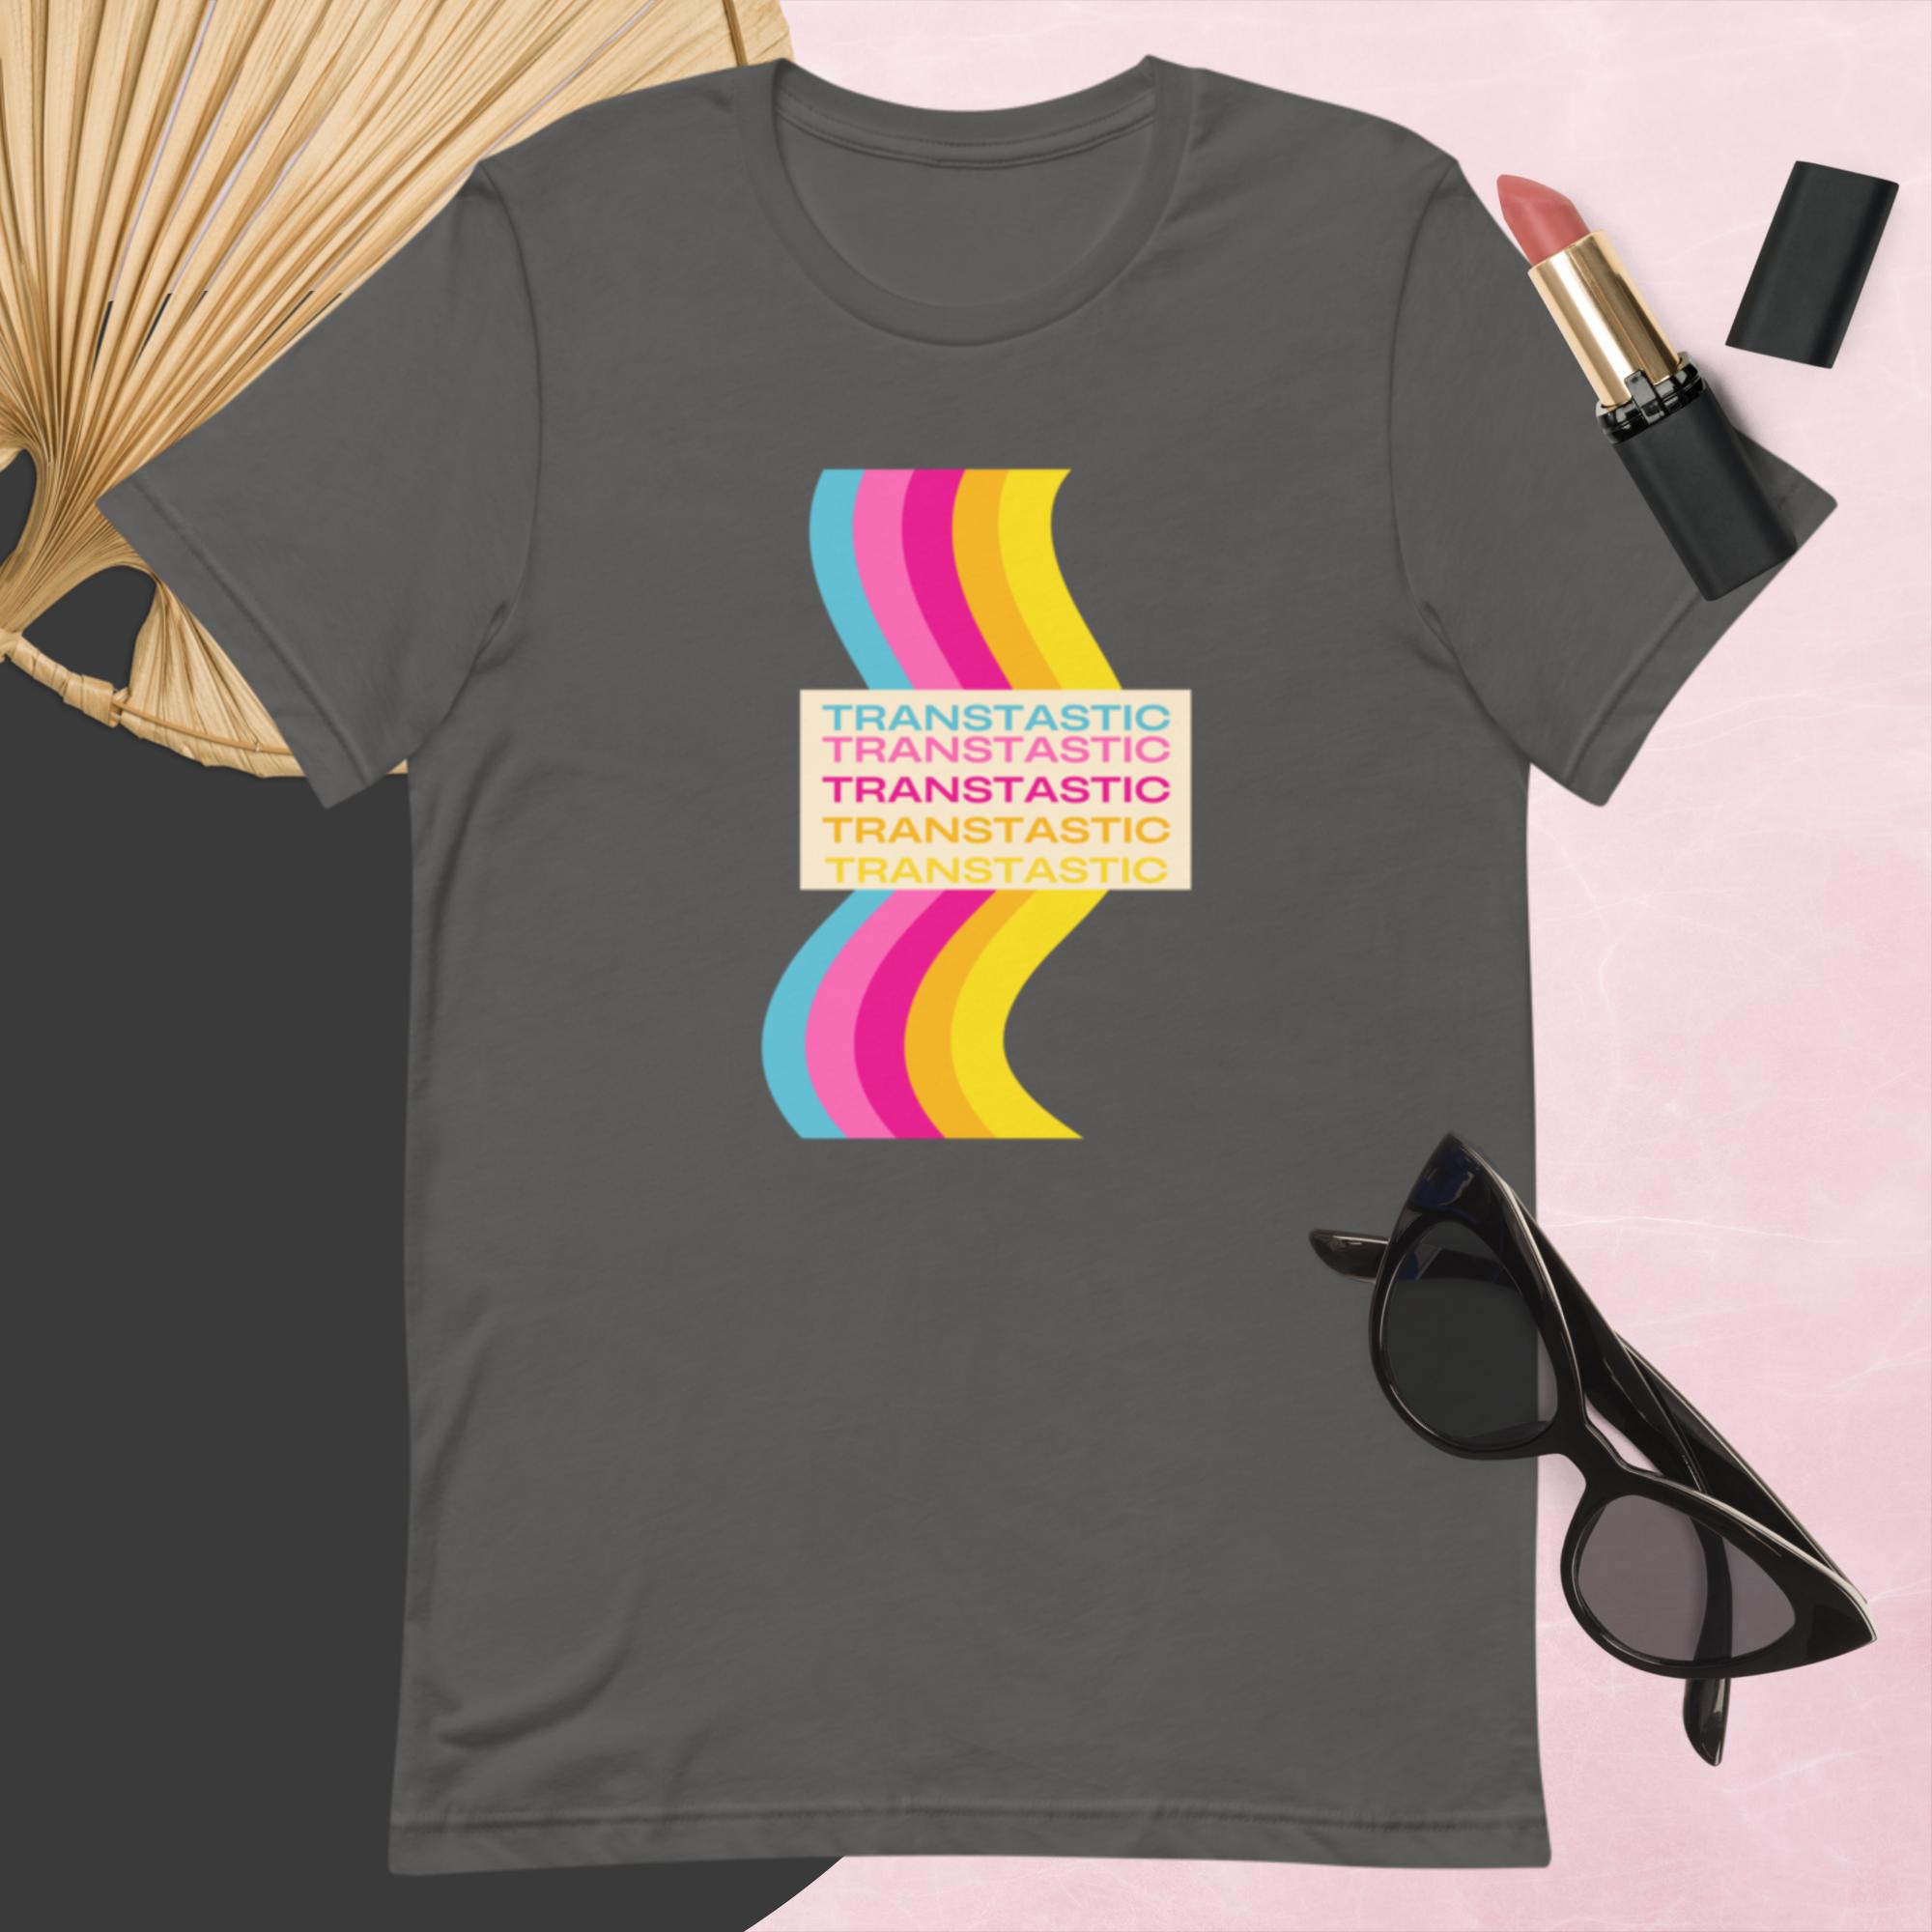 Custom Printed Shirts Transtastic Gender-Free Statement Tee